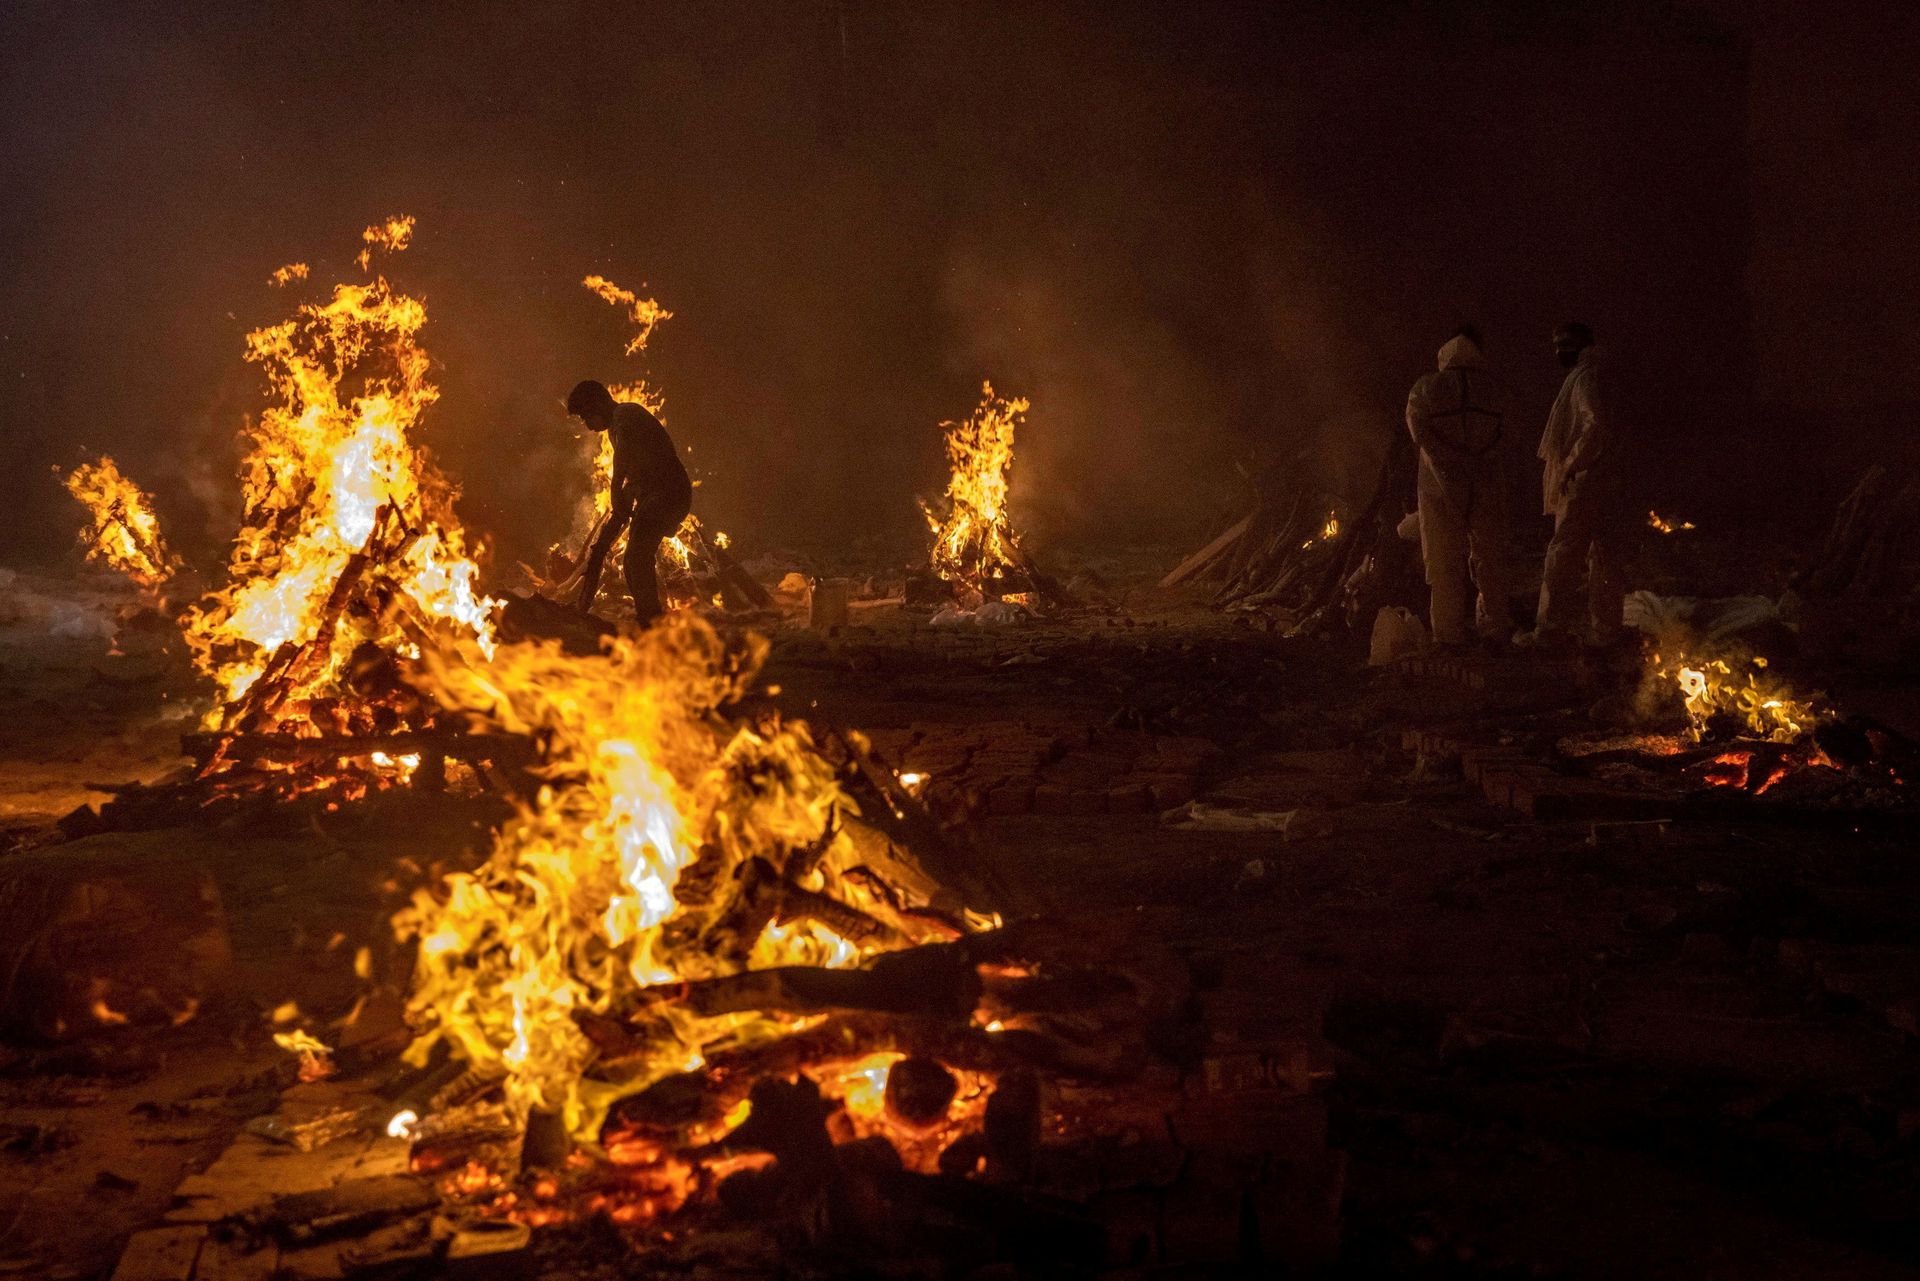 People cremate the bodies of COVID-19 victims at a crematorium ground in New Delhi, India, 24 April 2021. Photo: Danish Siddiqui / REUTERS